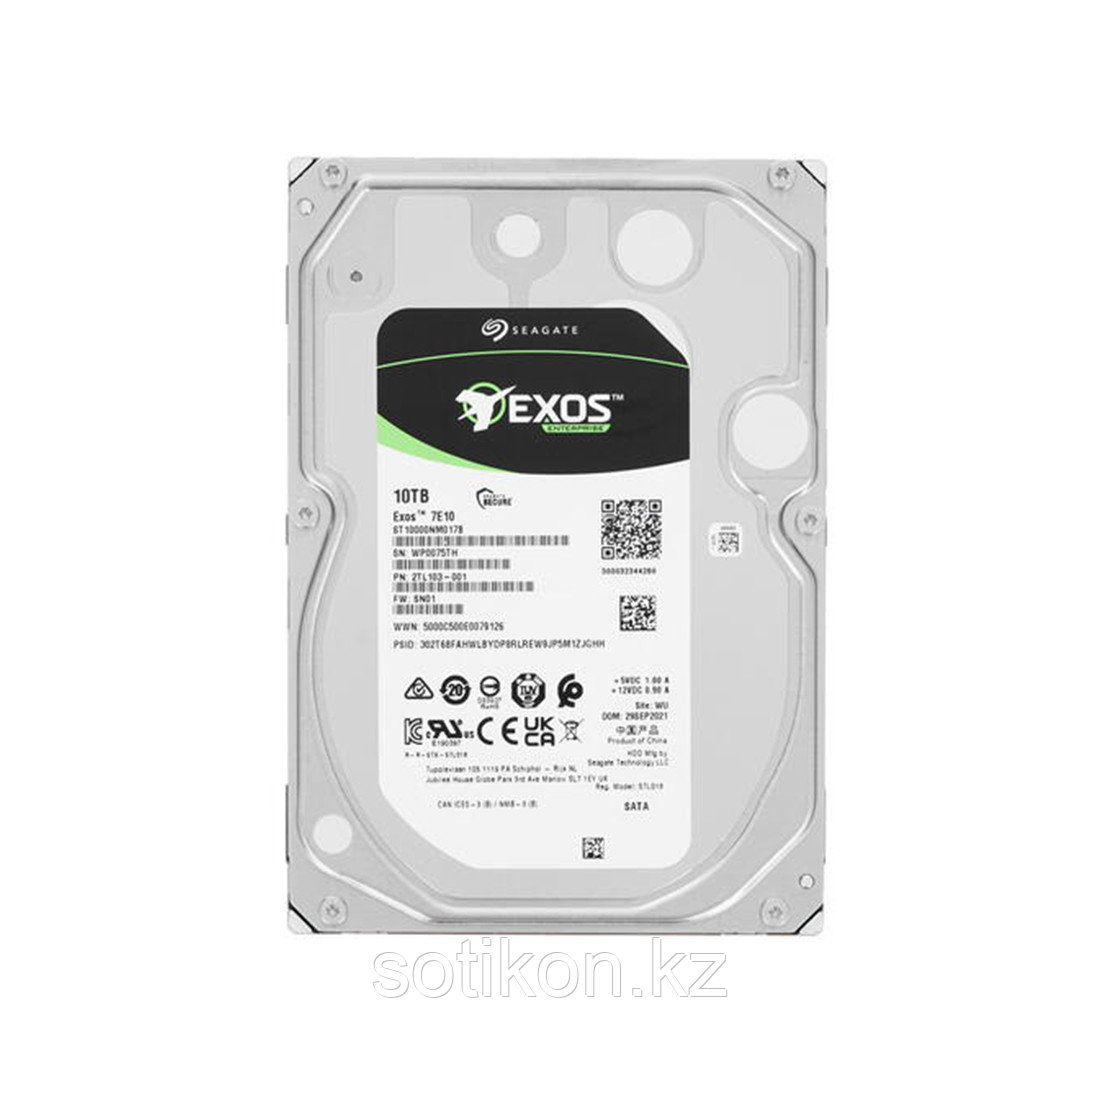 Жесткий диск Seagate Exos 7E10 ST10000NM017B 10TB SATA3